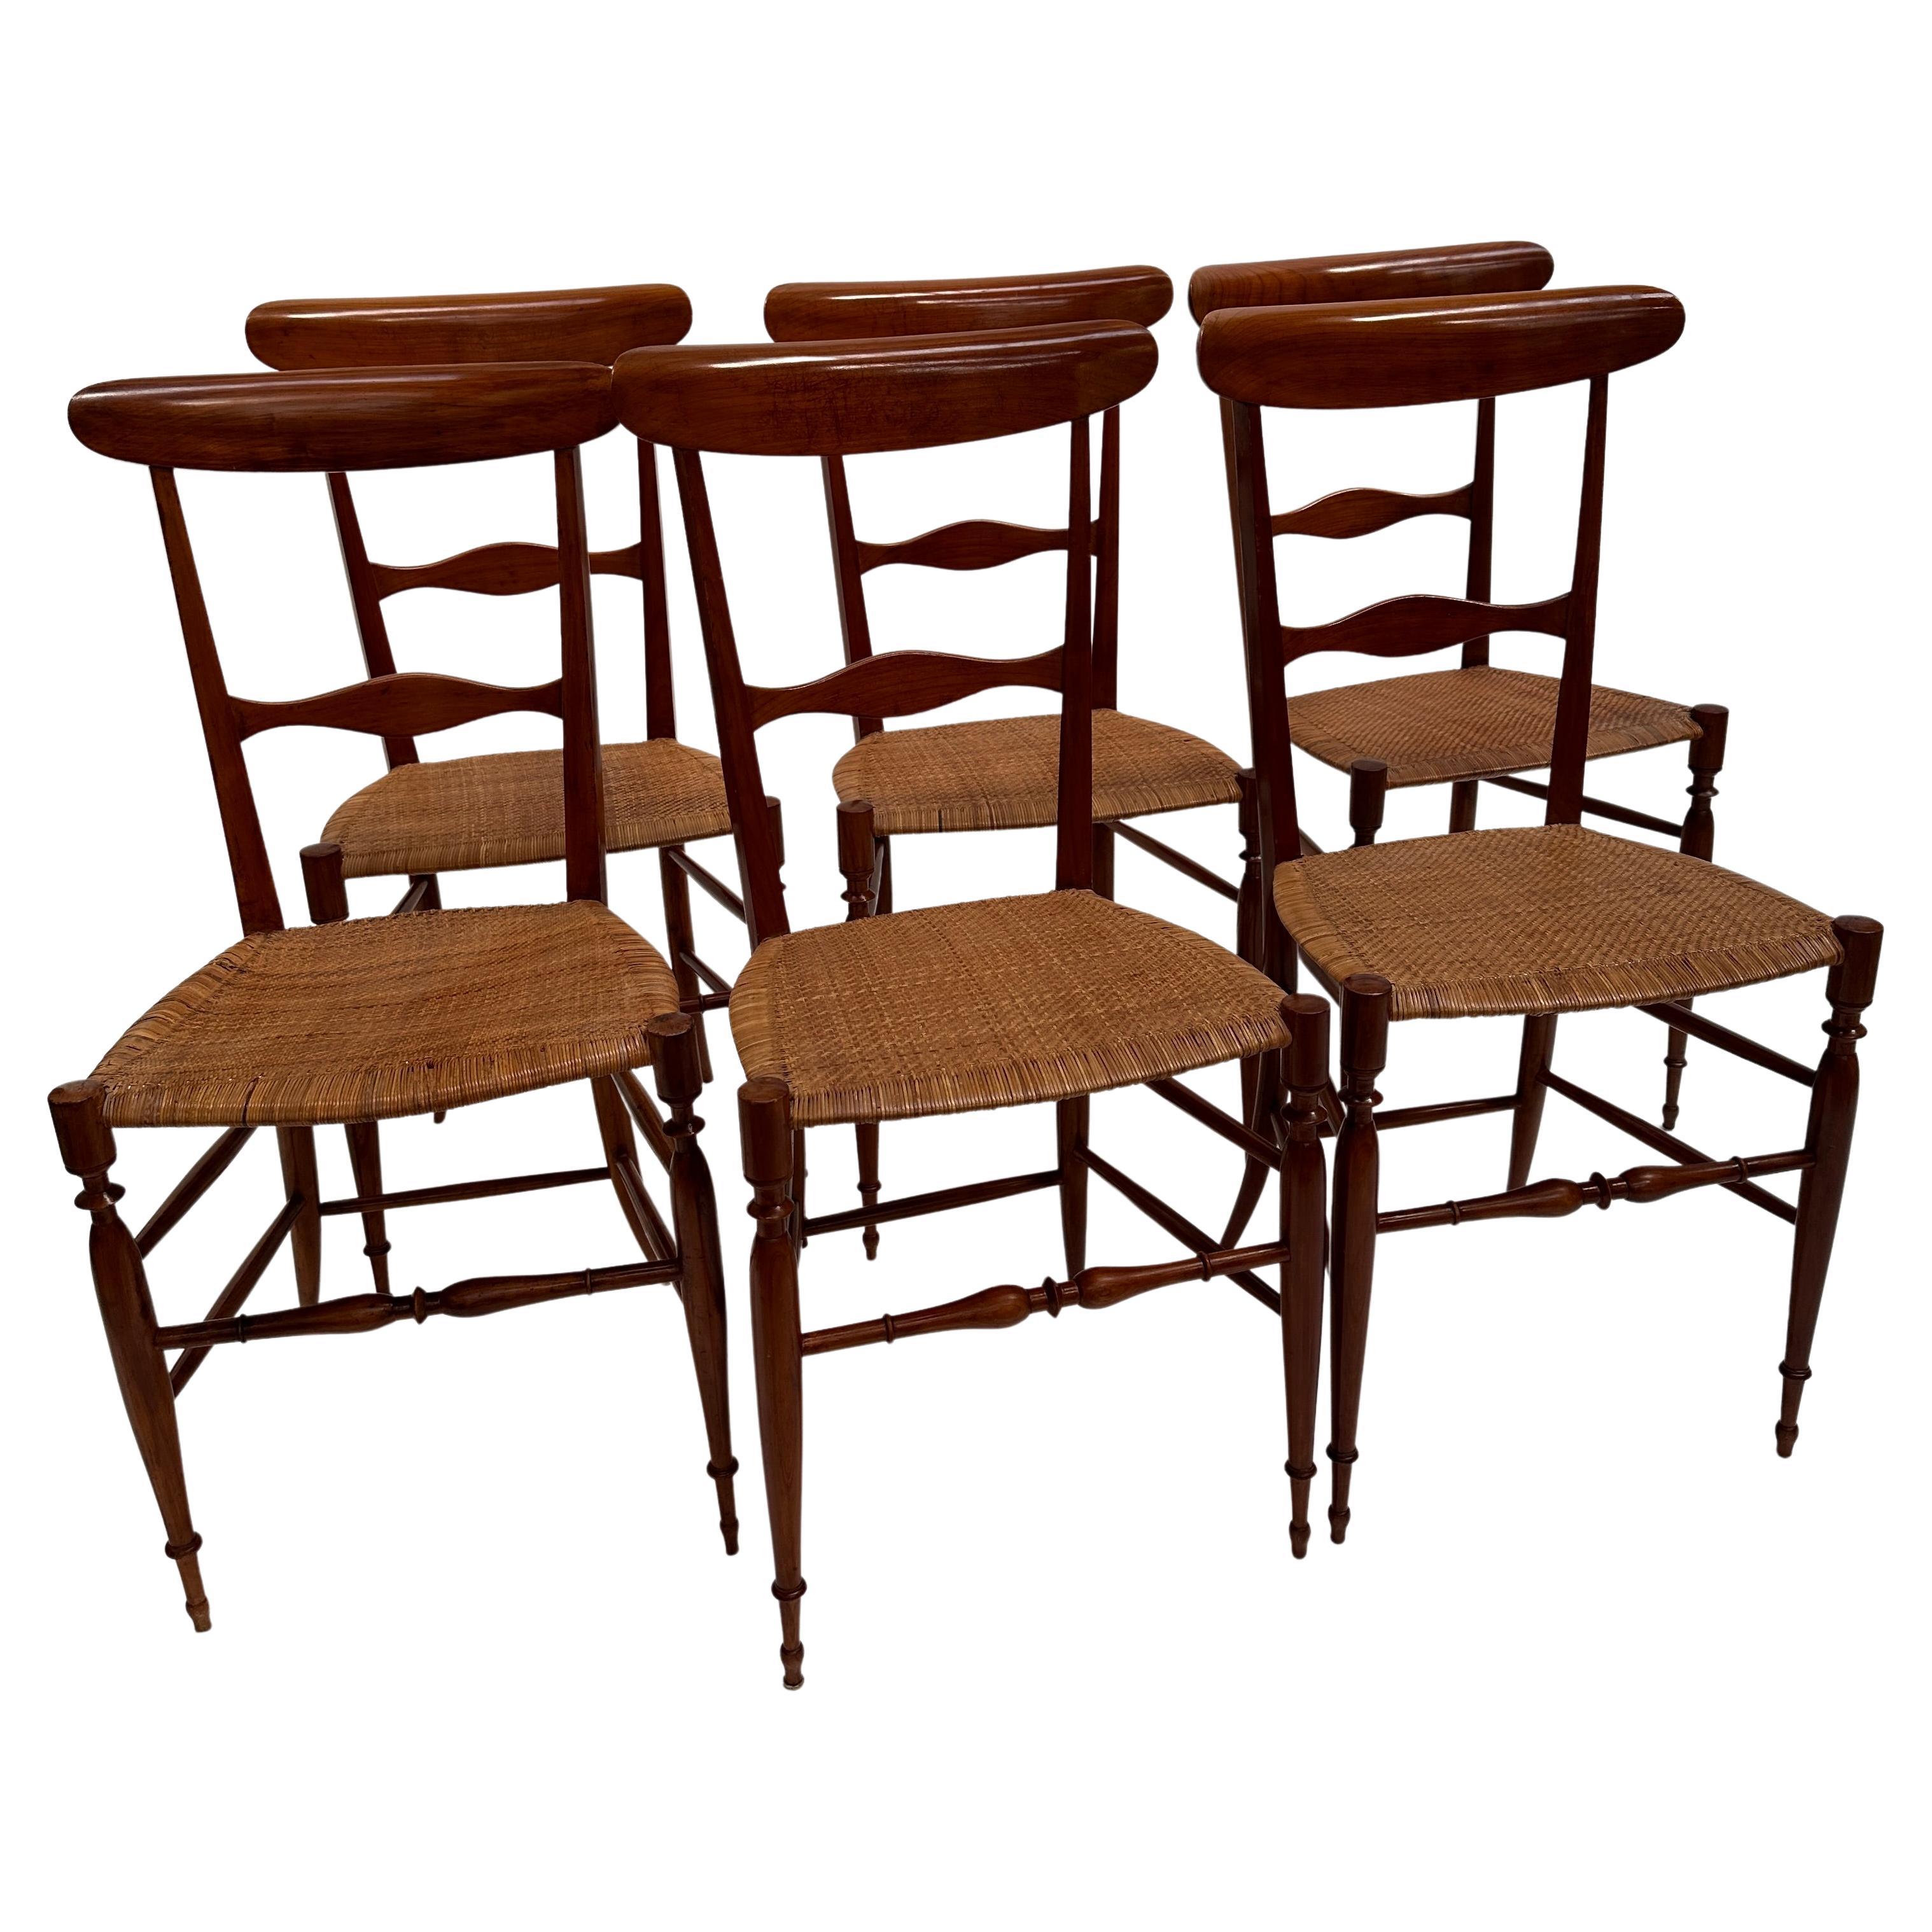 6 Chairs Superleggera Chiavari For Sale